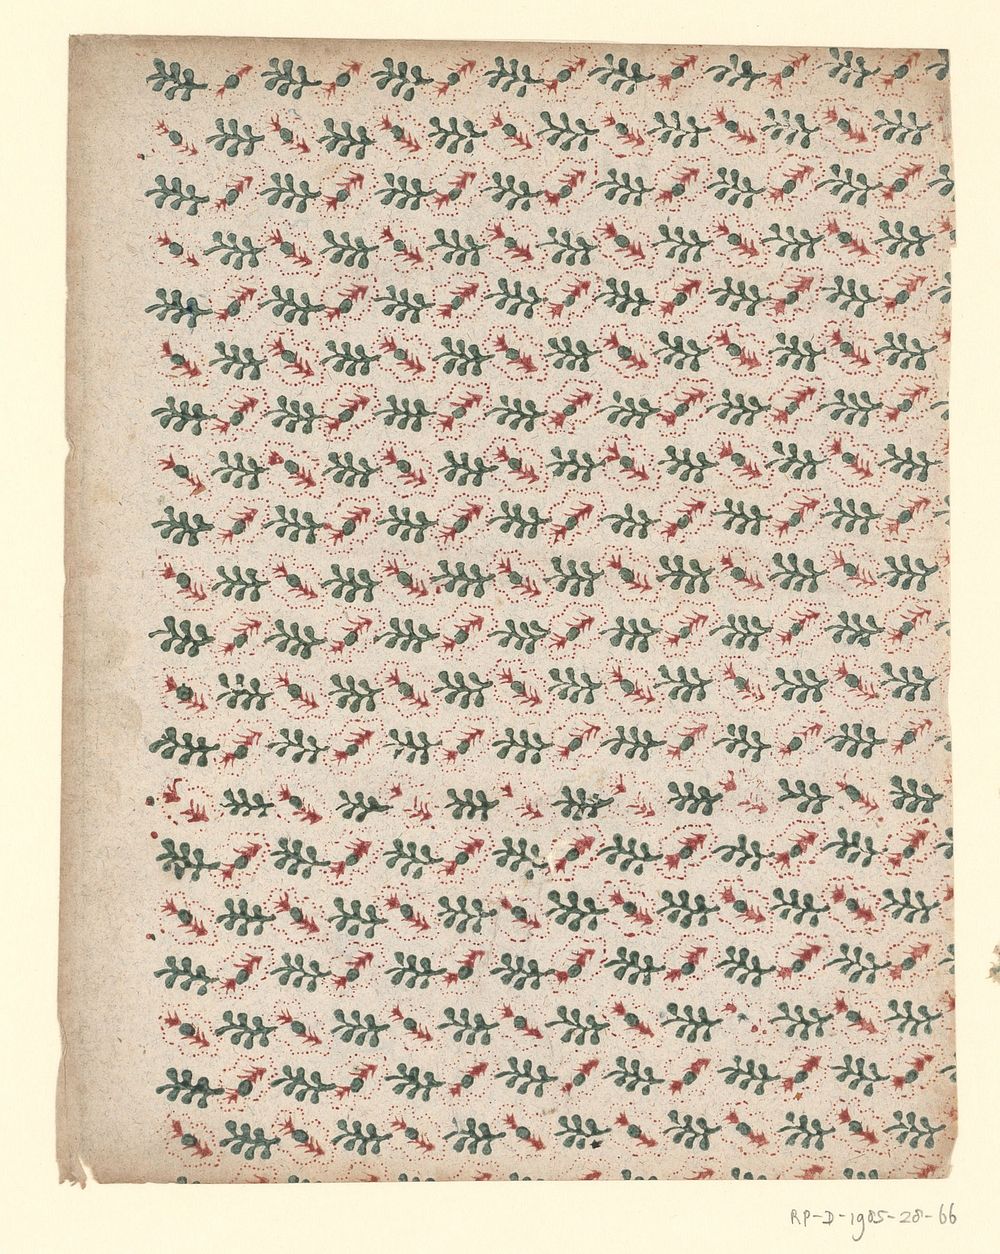 Blad met alternerend strooipatroon van takjes omringd door punten (1750 - 1900) by anonymous